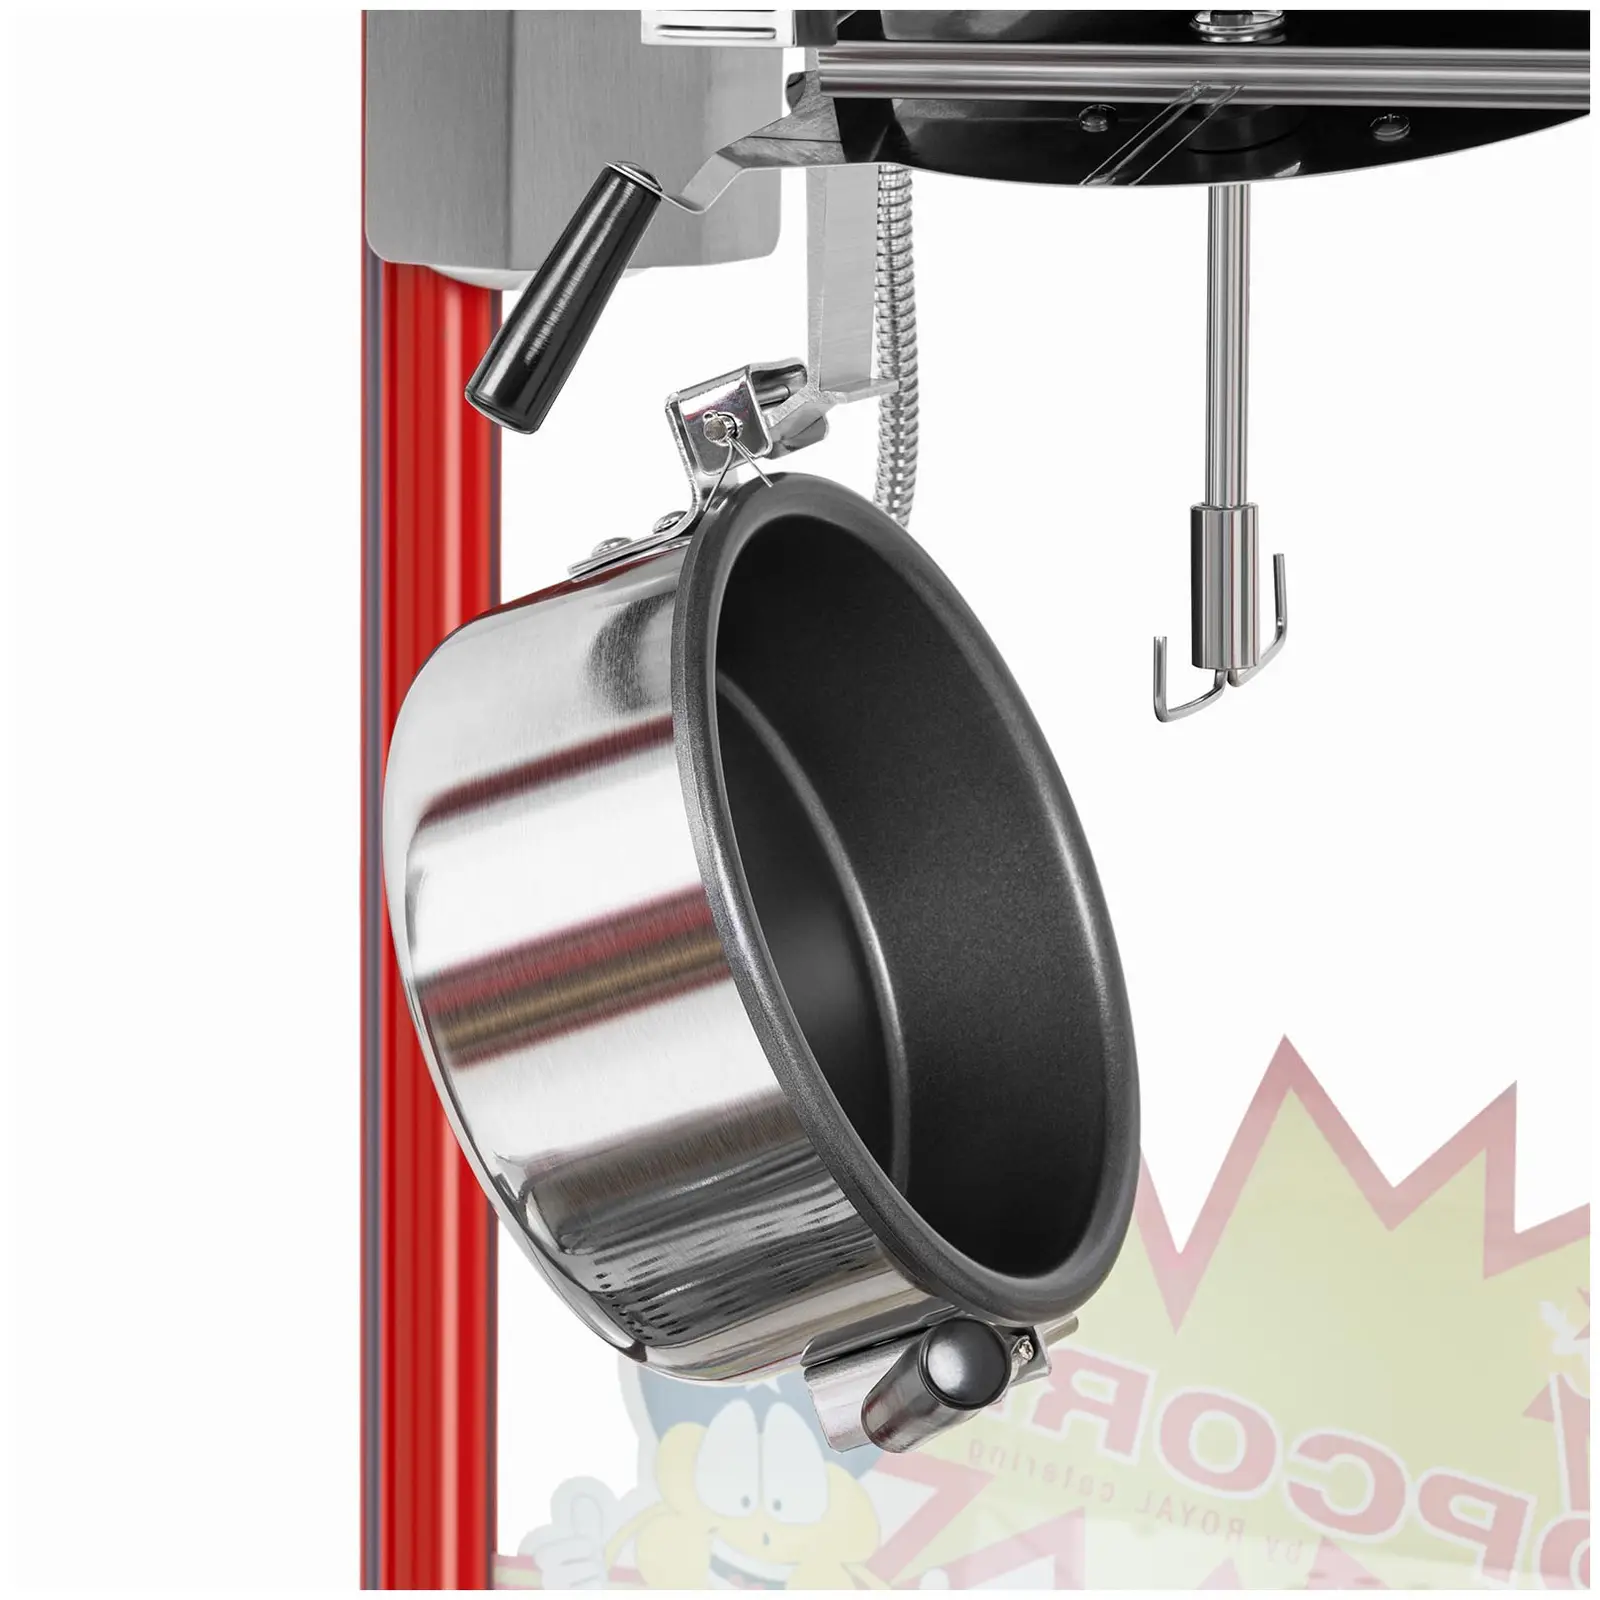 Popcornmachine - Retro design - 150 / 180 °C - rood - Royal Catering